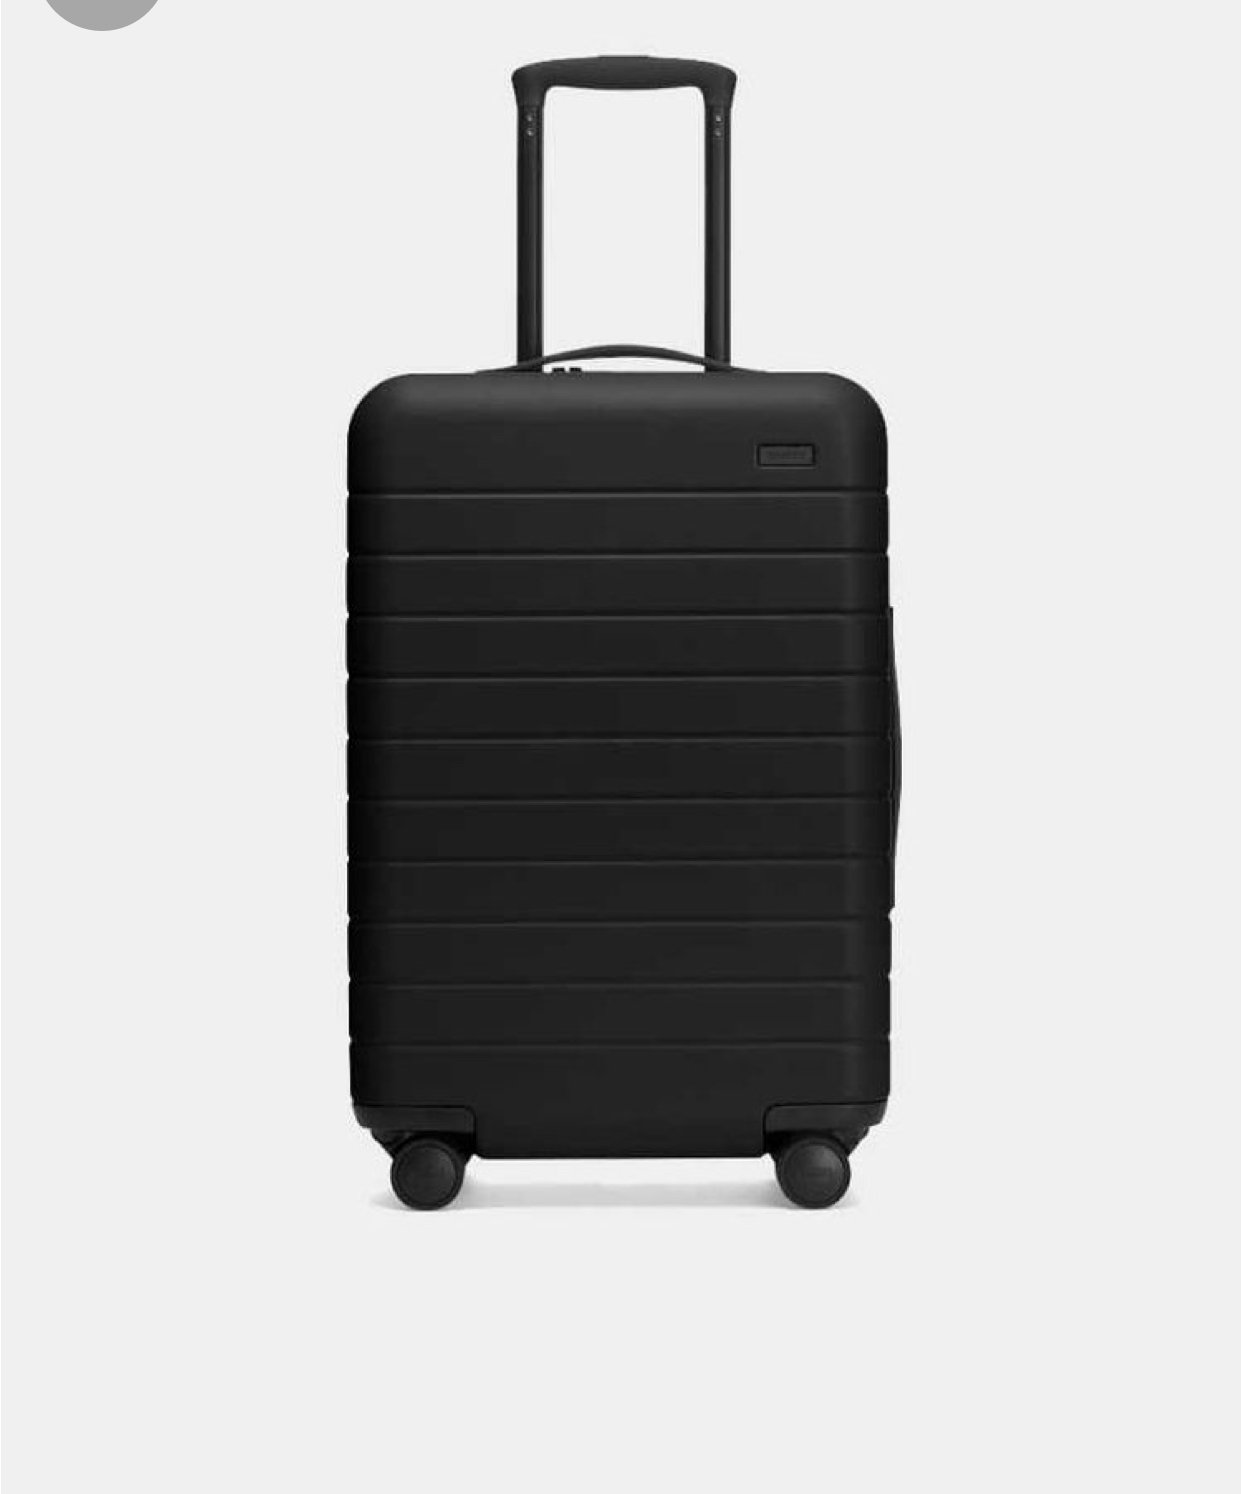 Suitcase set